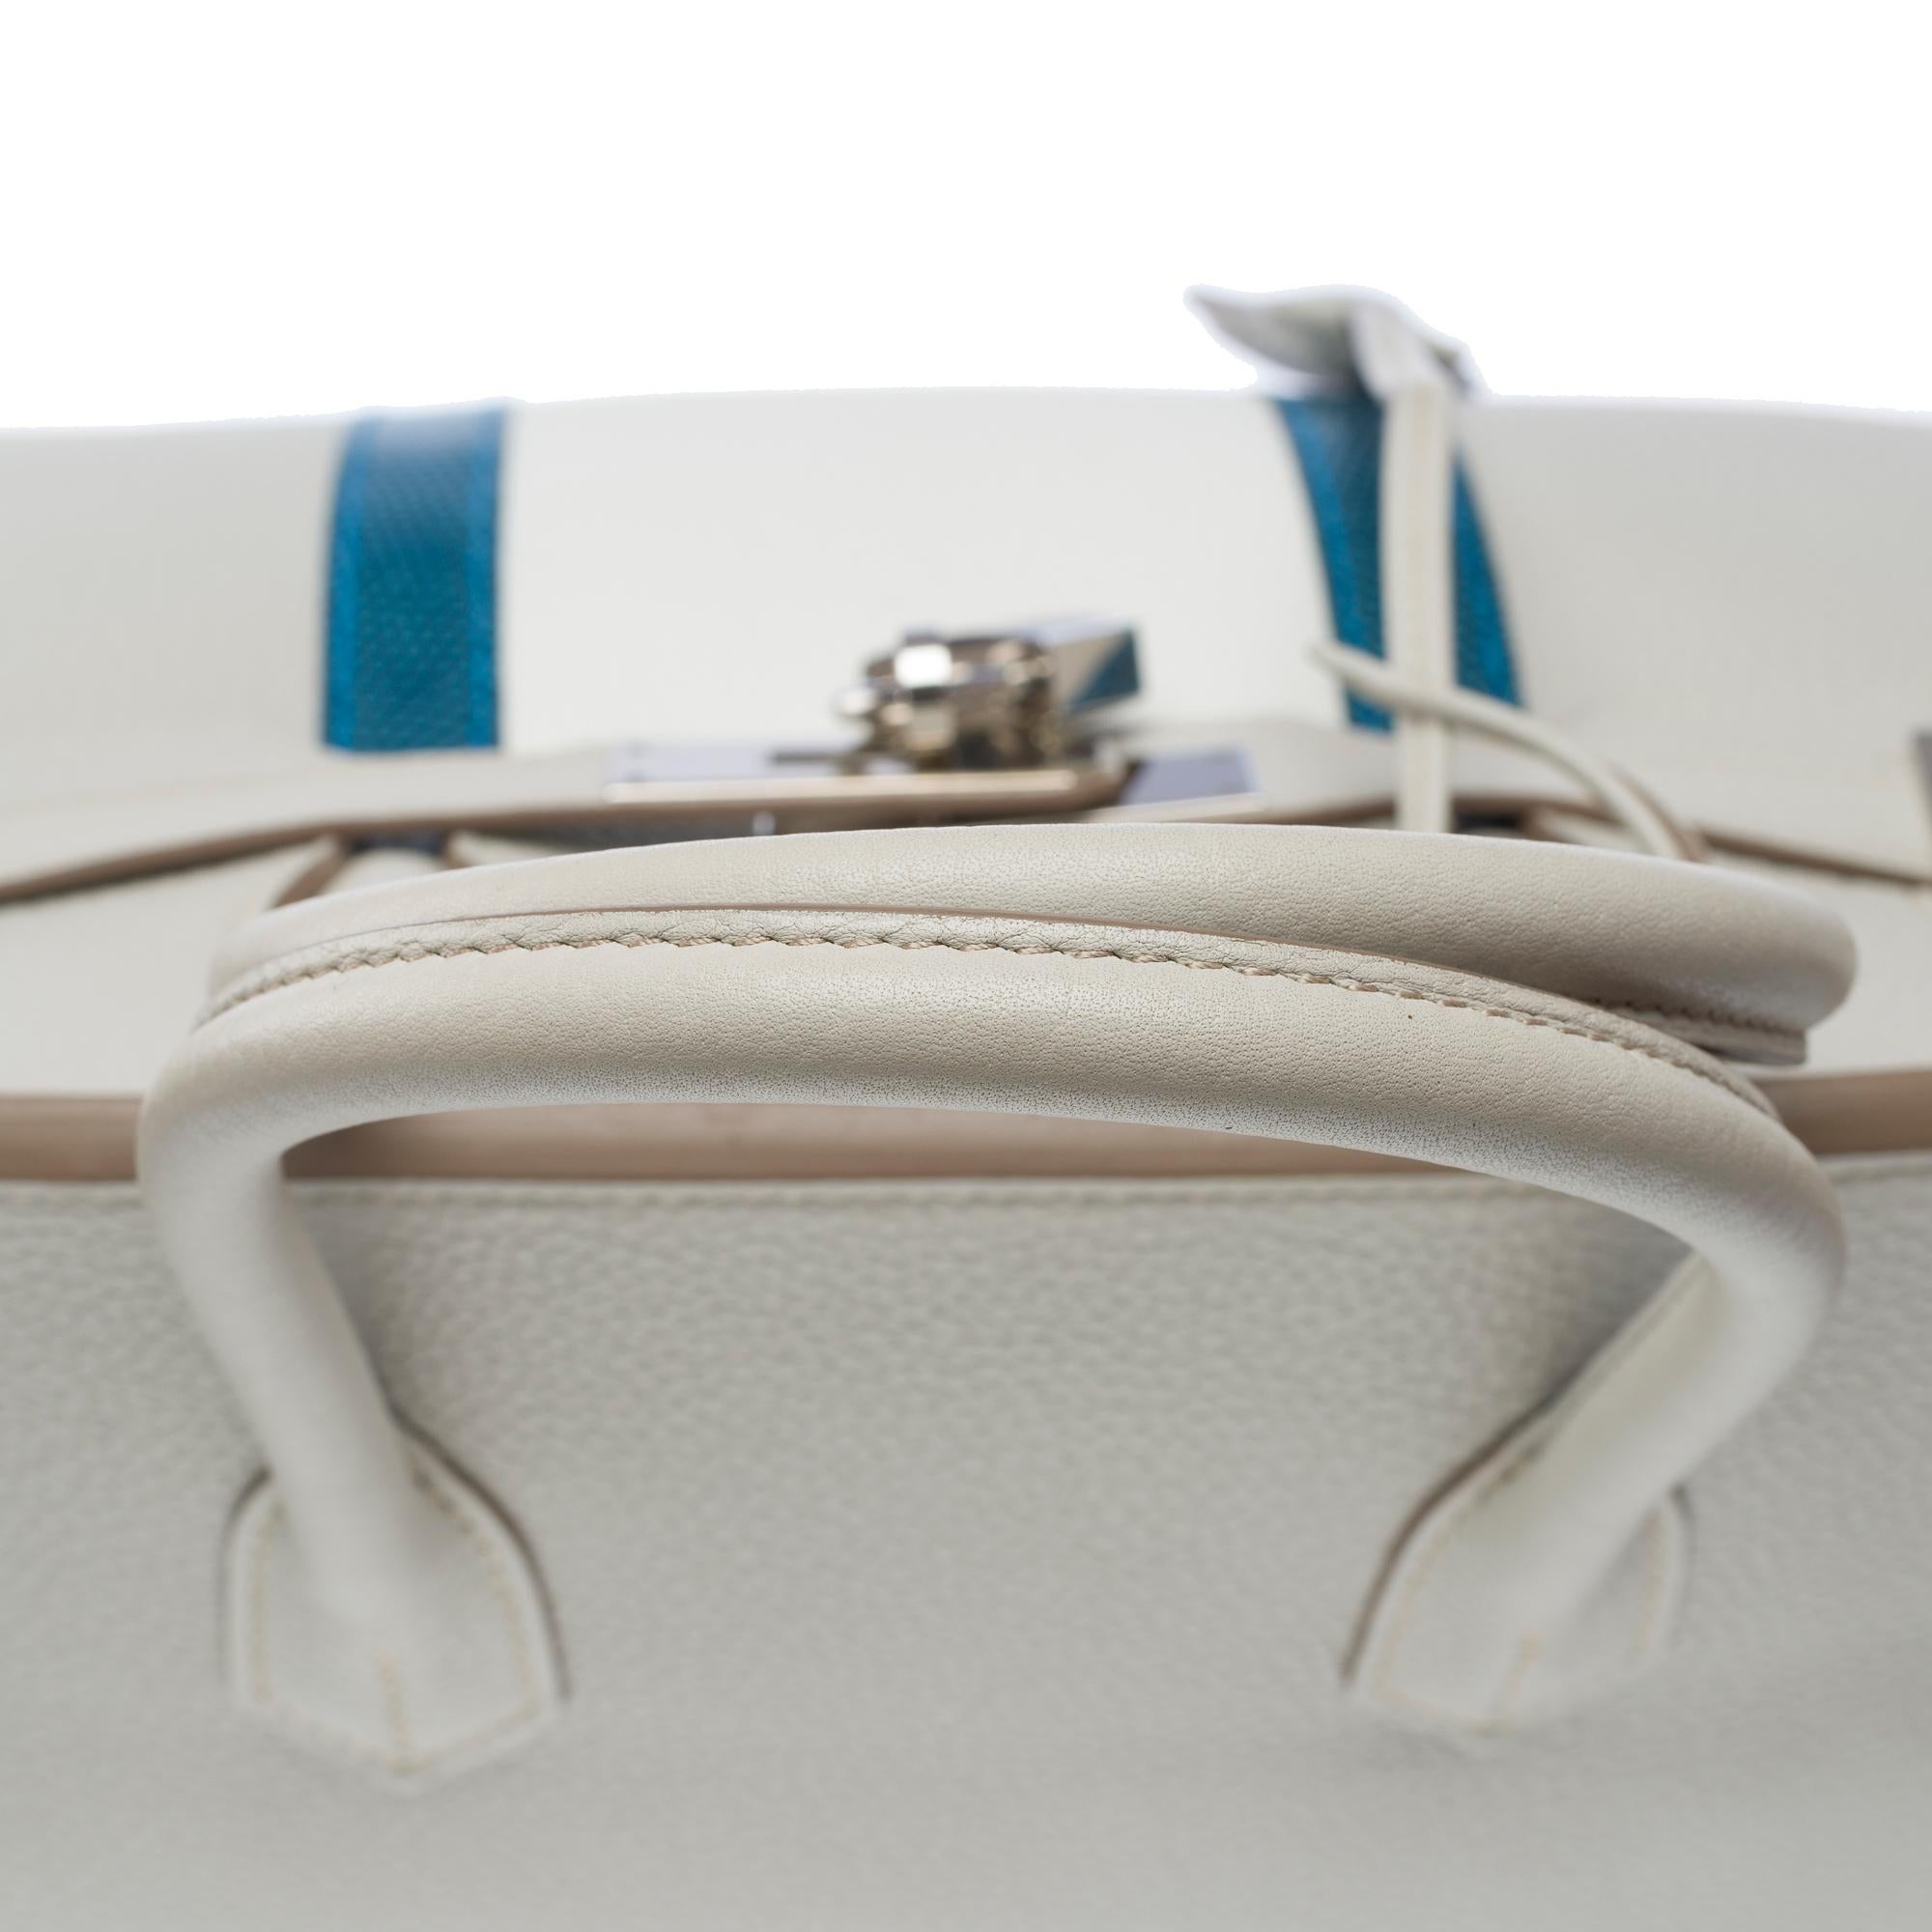 Rare Hermès Birkin Club 35 handbag in grey, white leather and blue lizard, SHW For Sale 7